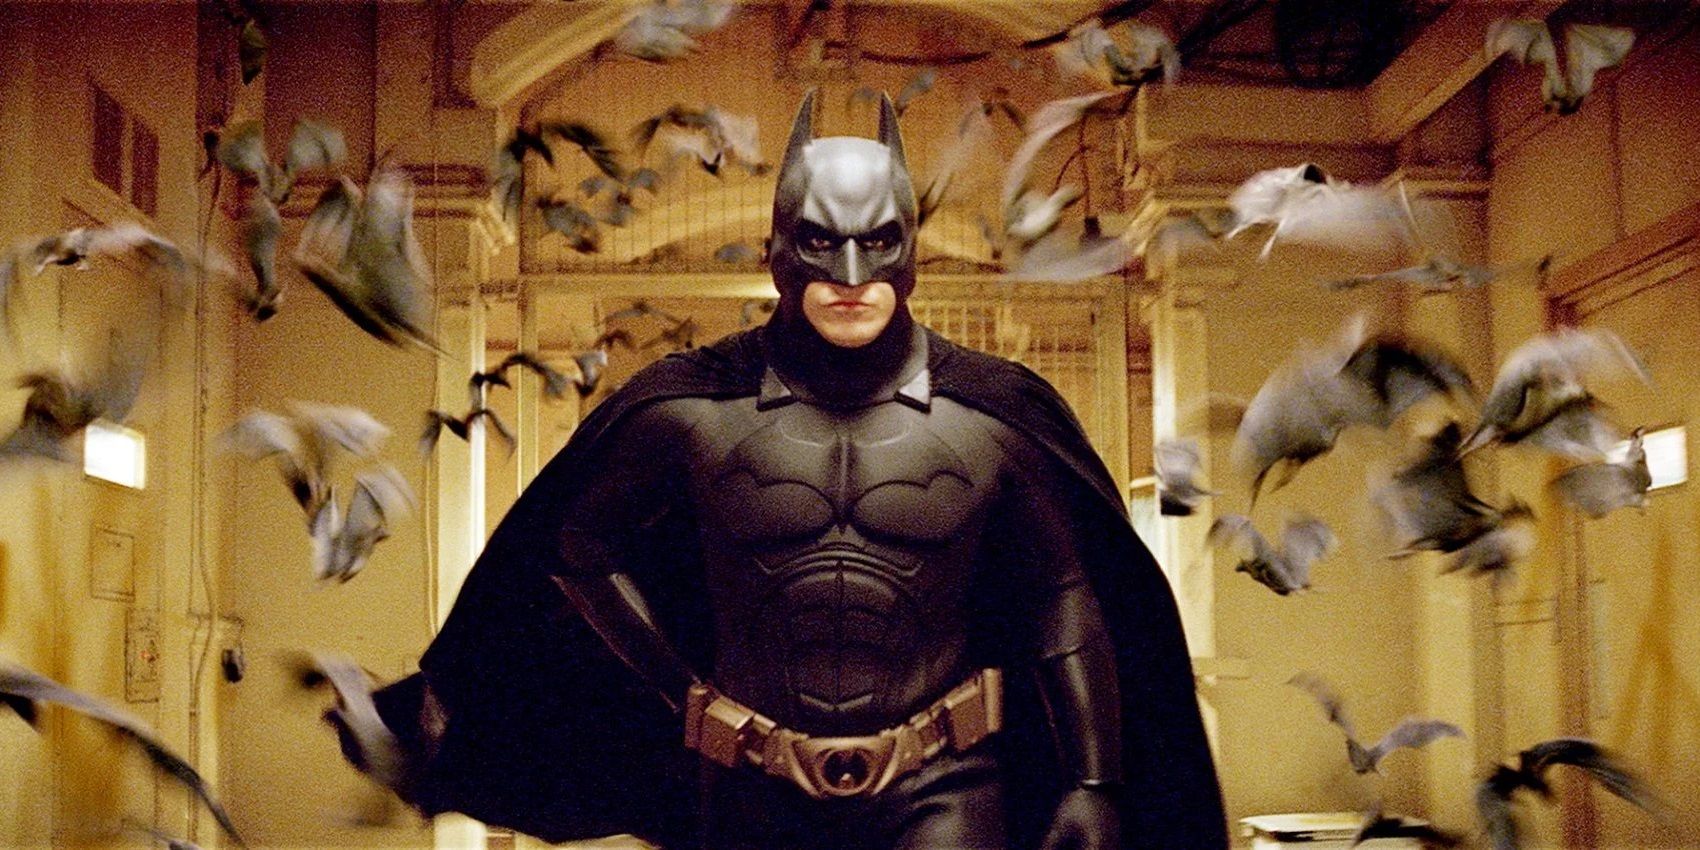 Batman running down a hall with bats flying behind him in Batman Begins.